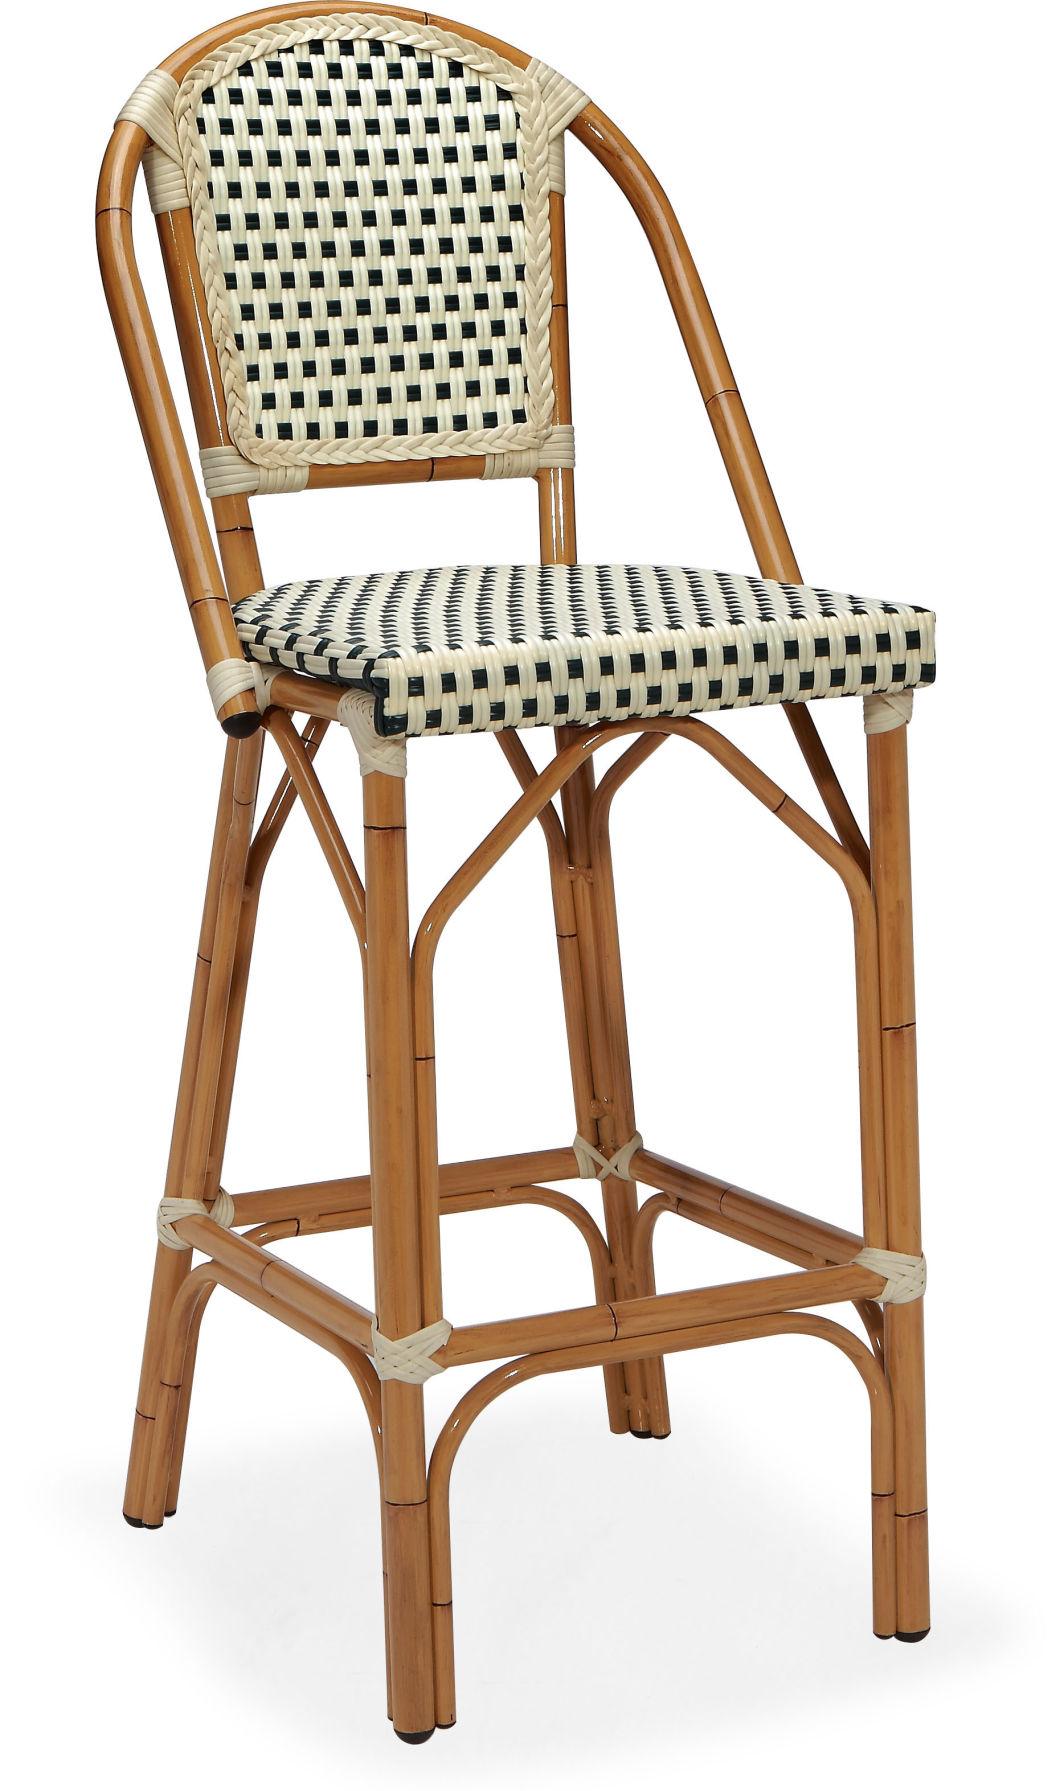 Waterproof Wicker Rattan Chairs Easy Carry Stackable Space Saving French Bistro Garden 0utdoor Furniture Handmade Cane Chair